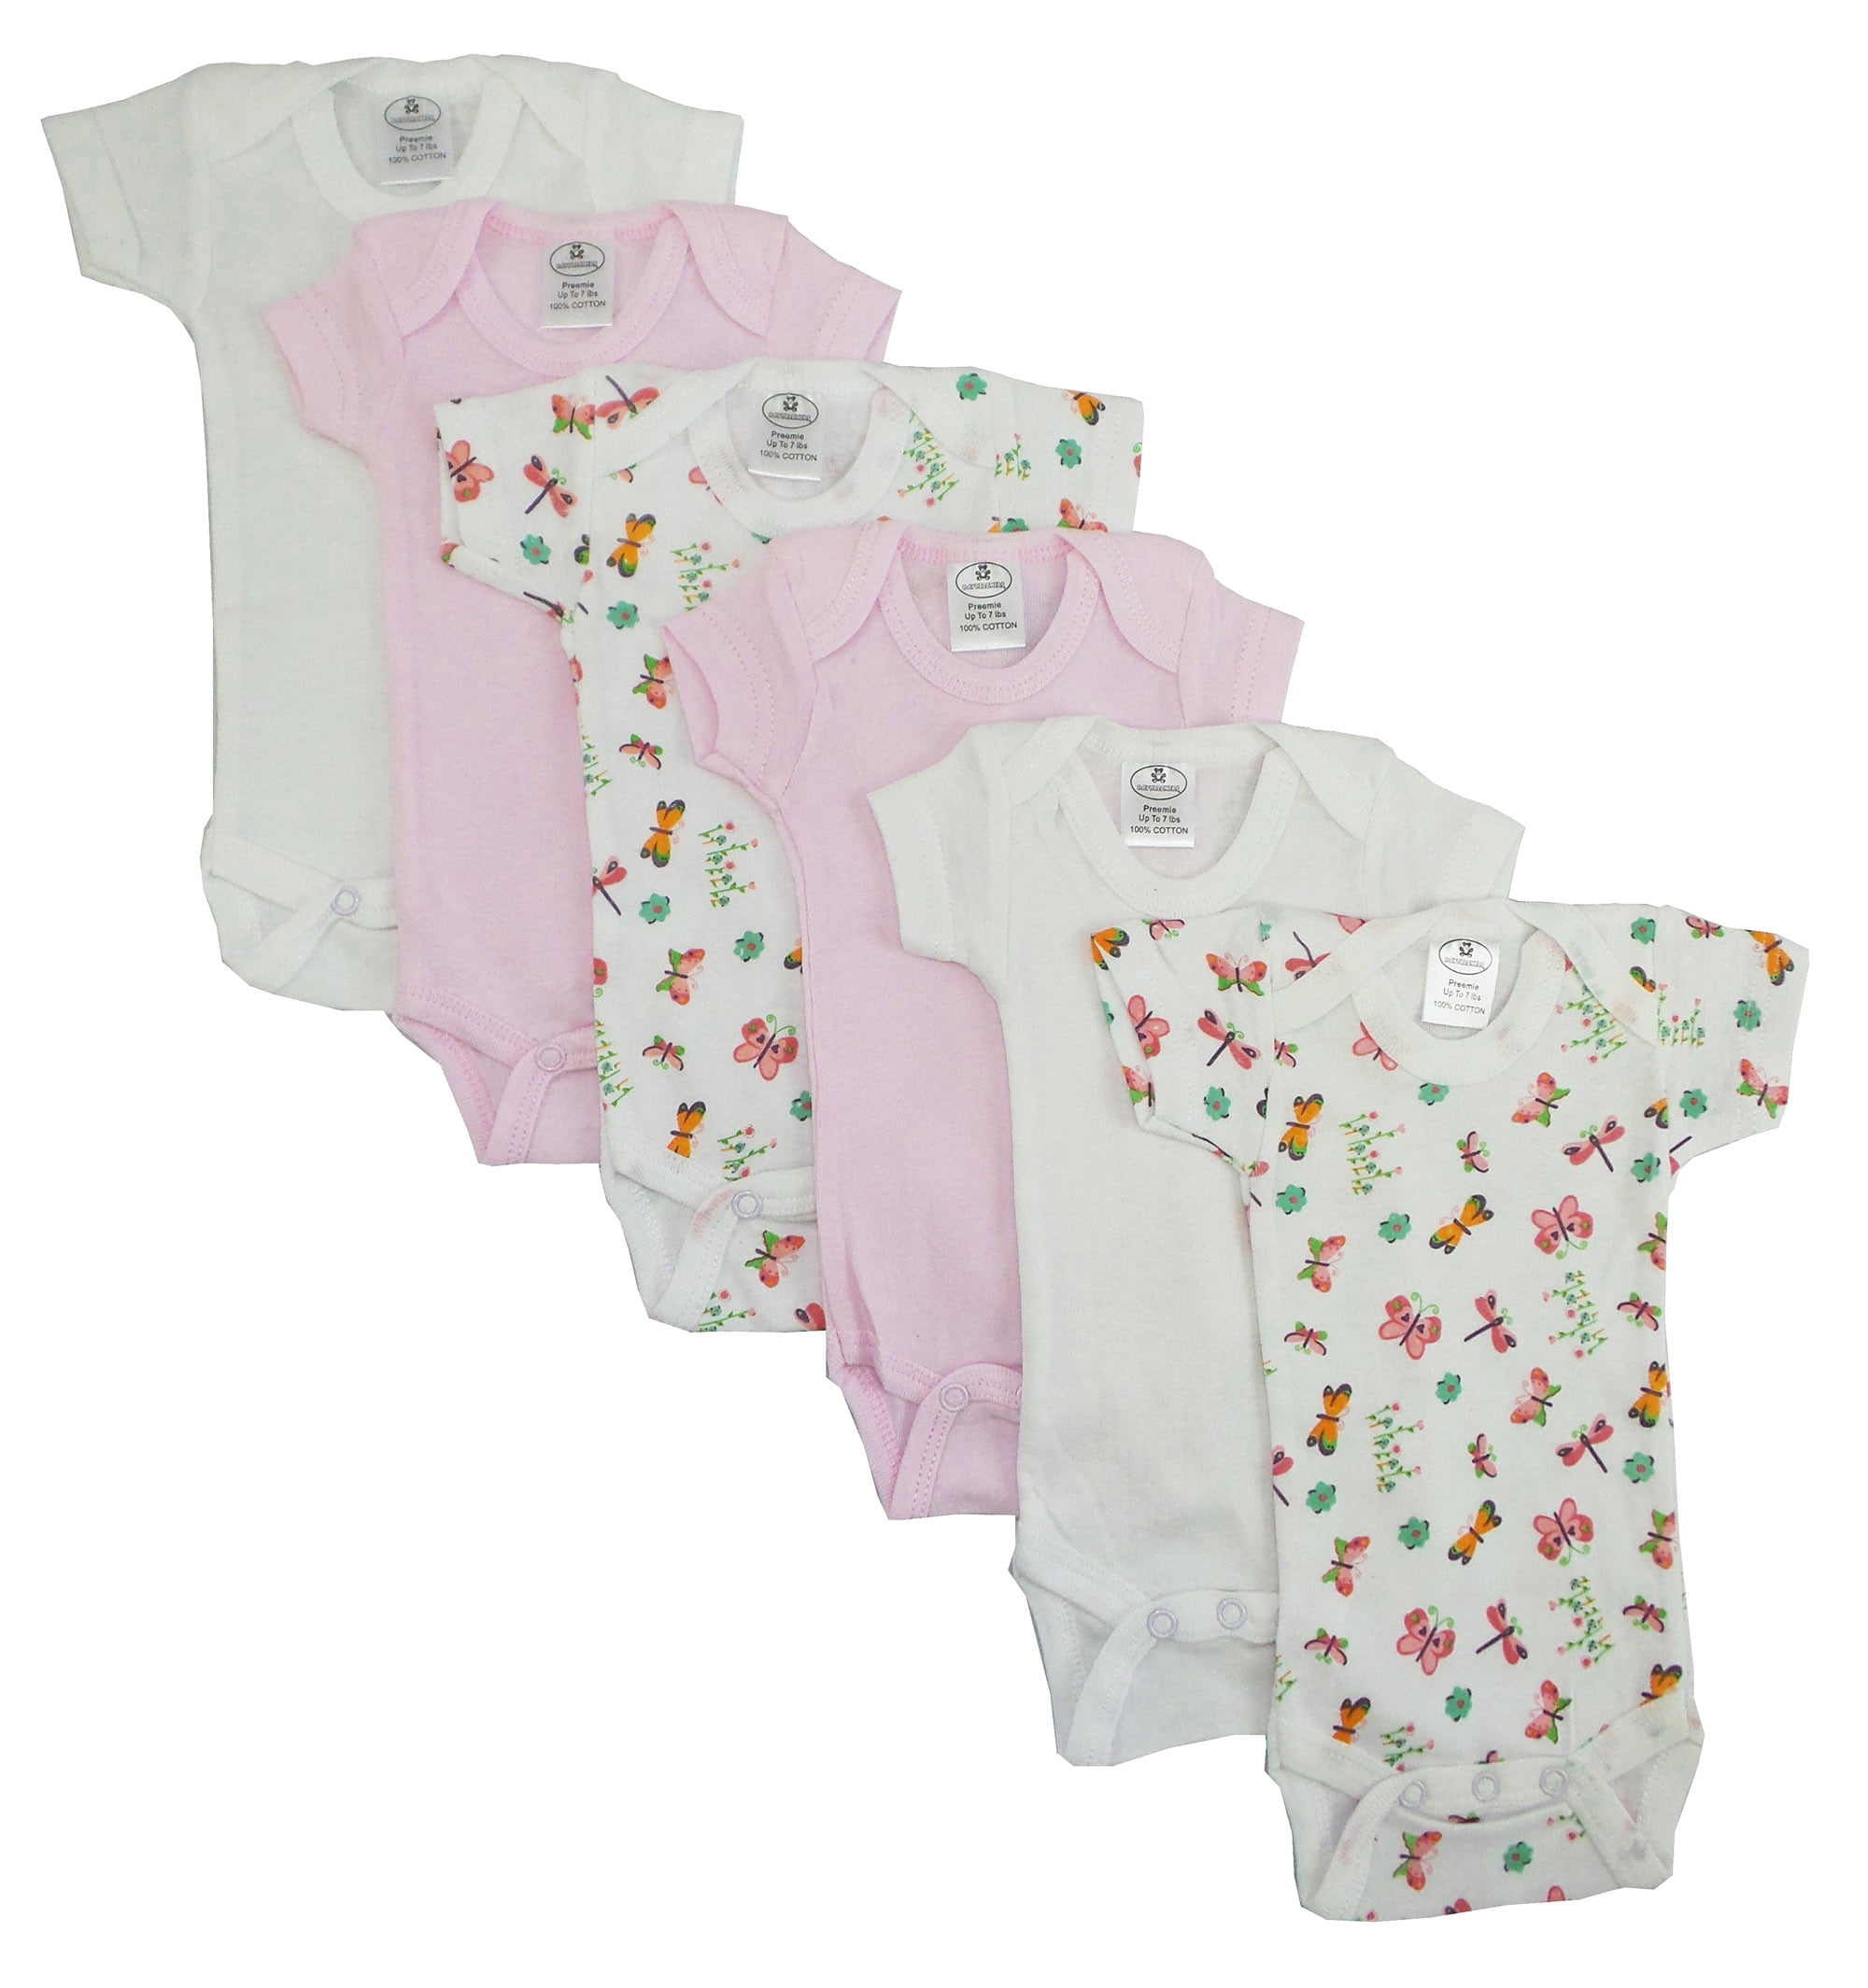 Cs-005nb-005nb Girls Short Sleeve With Printed, White & Pink - Newborn